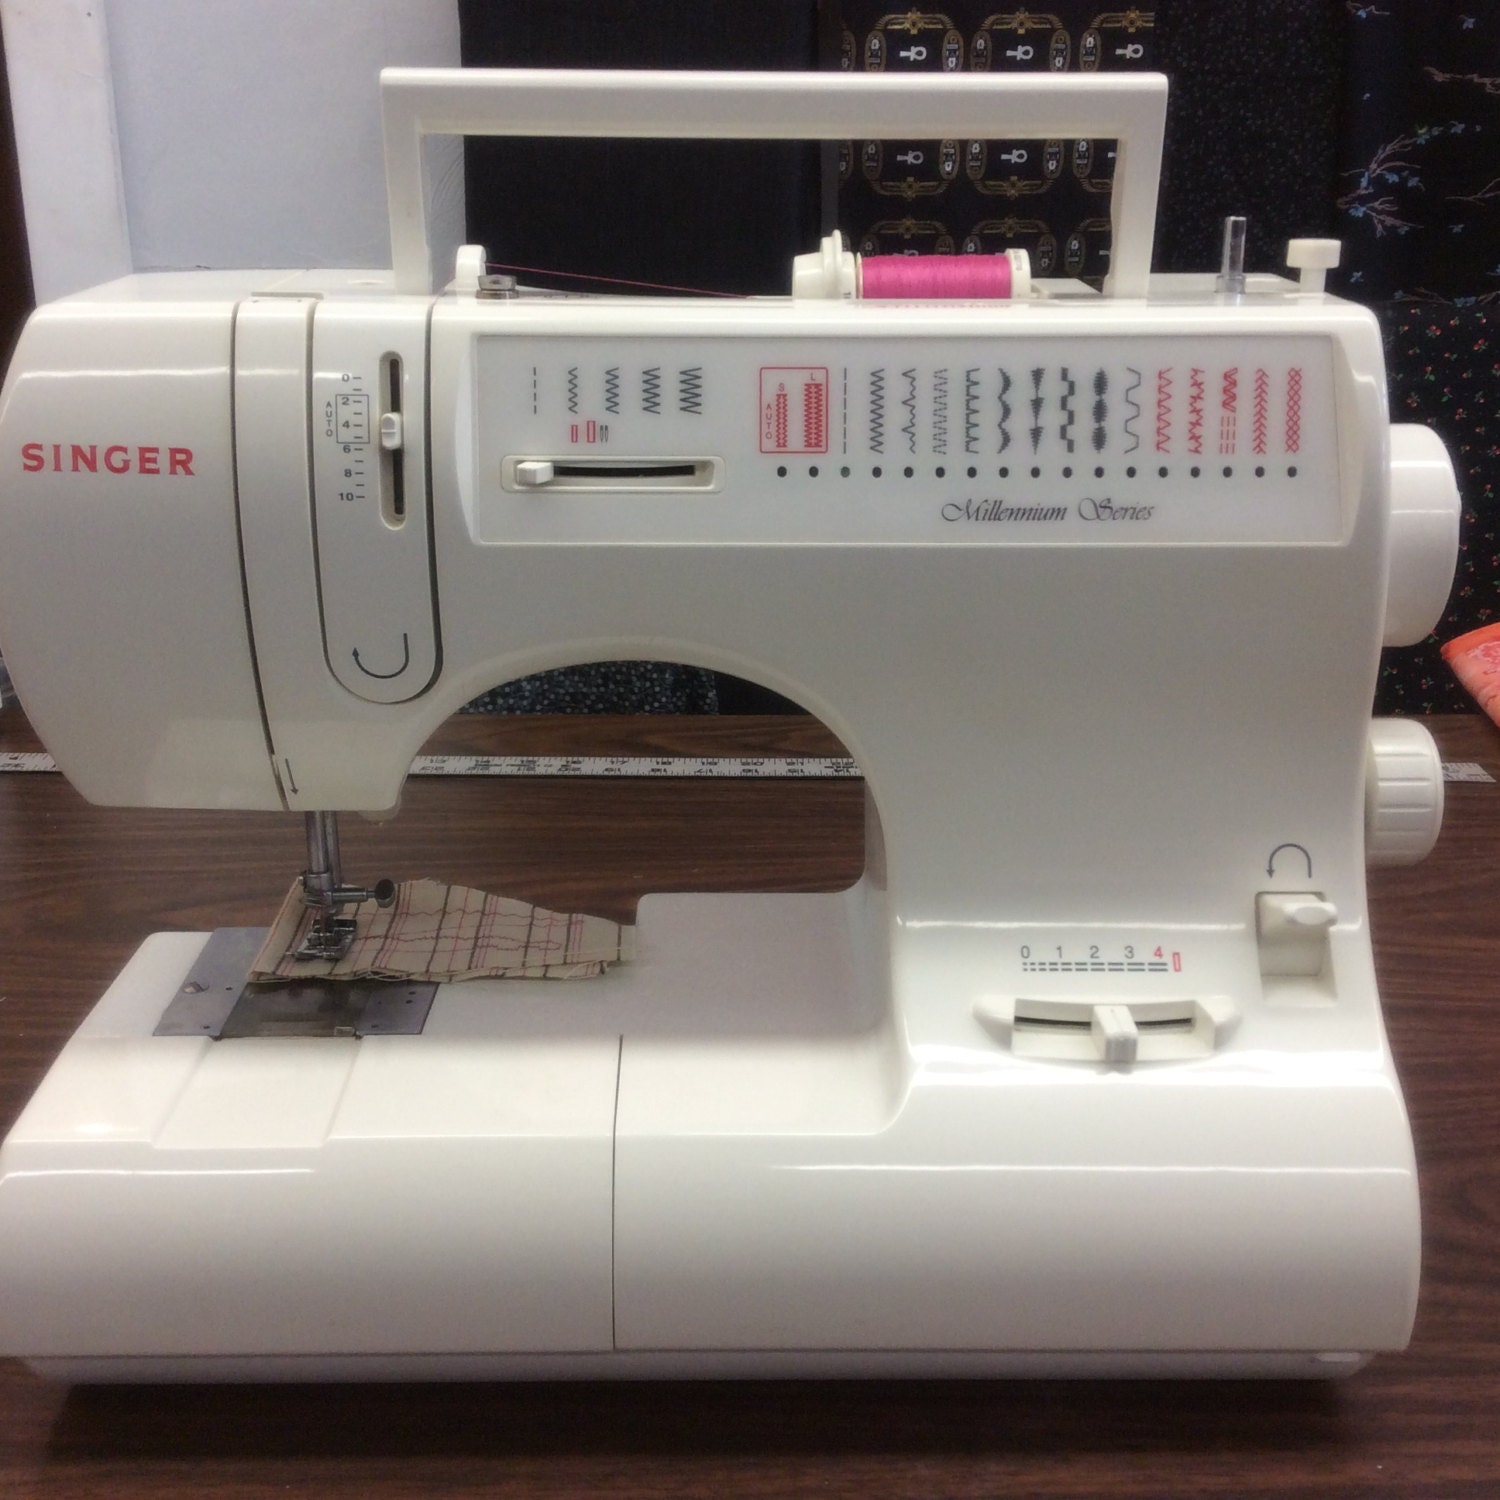 SINGER Millennium Series heavy duty free arm sewing machine